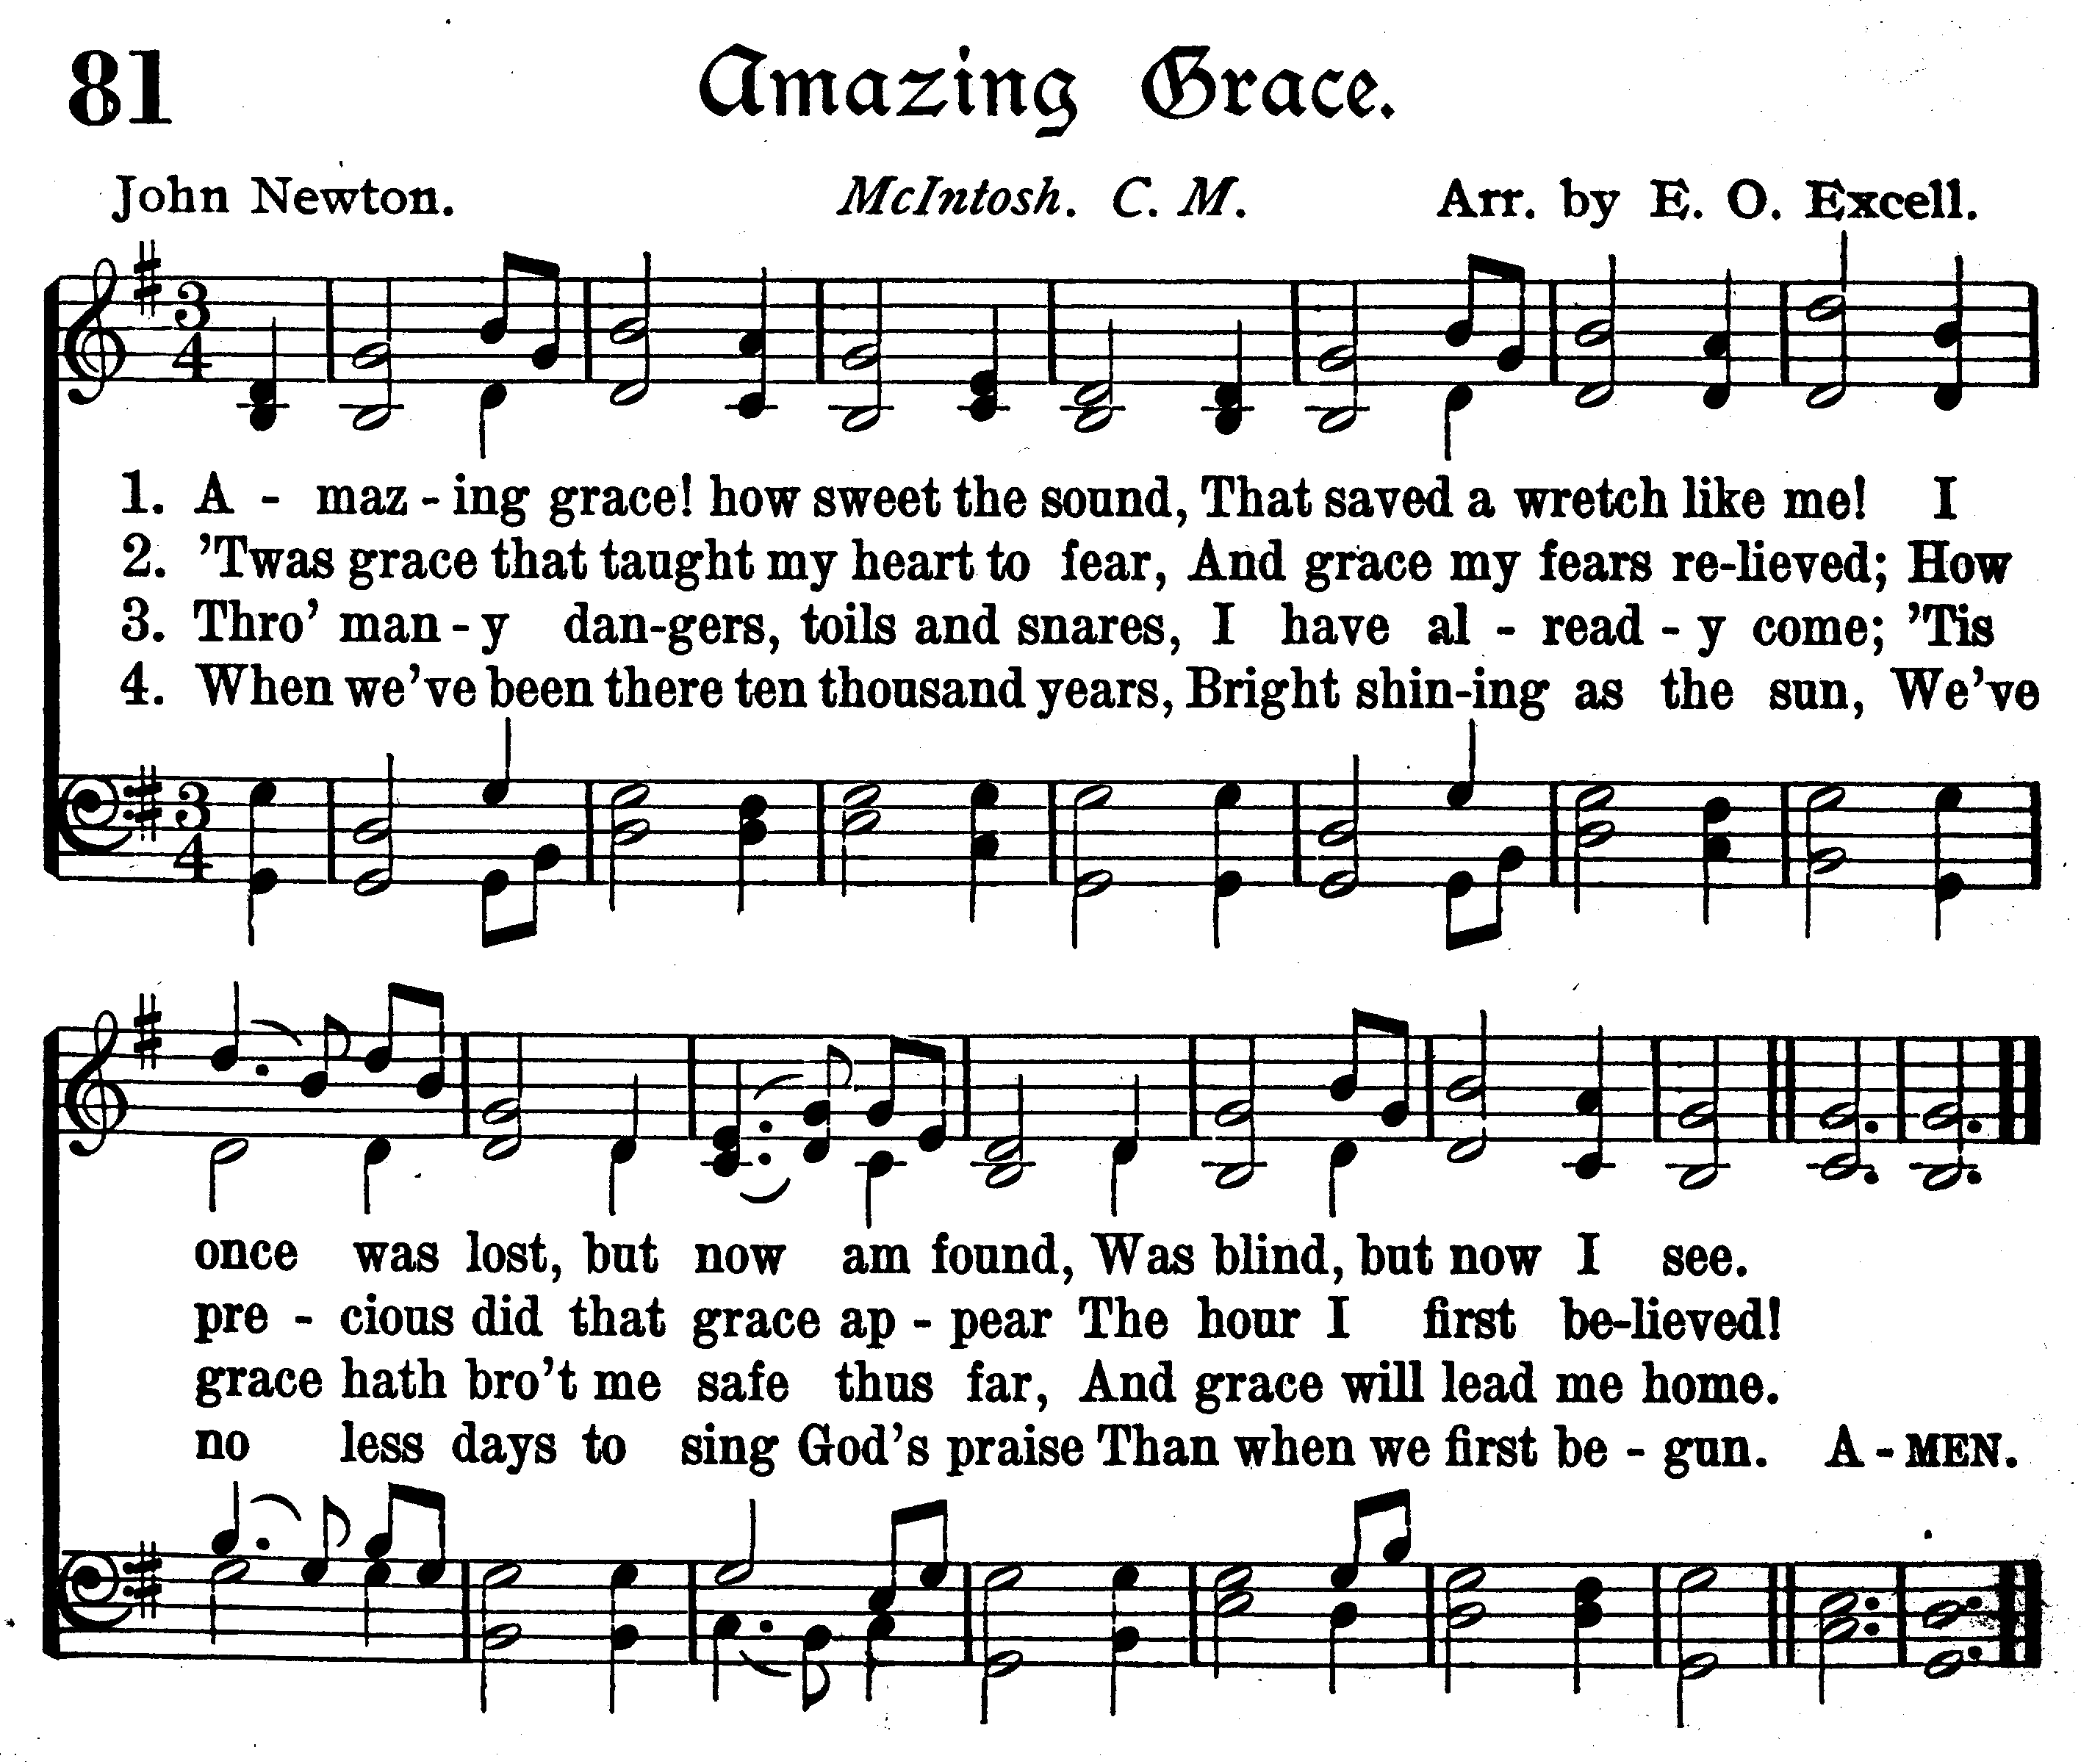 amazing grace lyrics printable pdf for free download